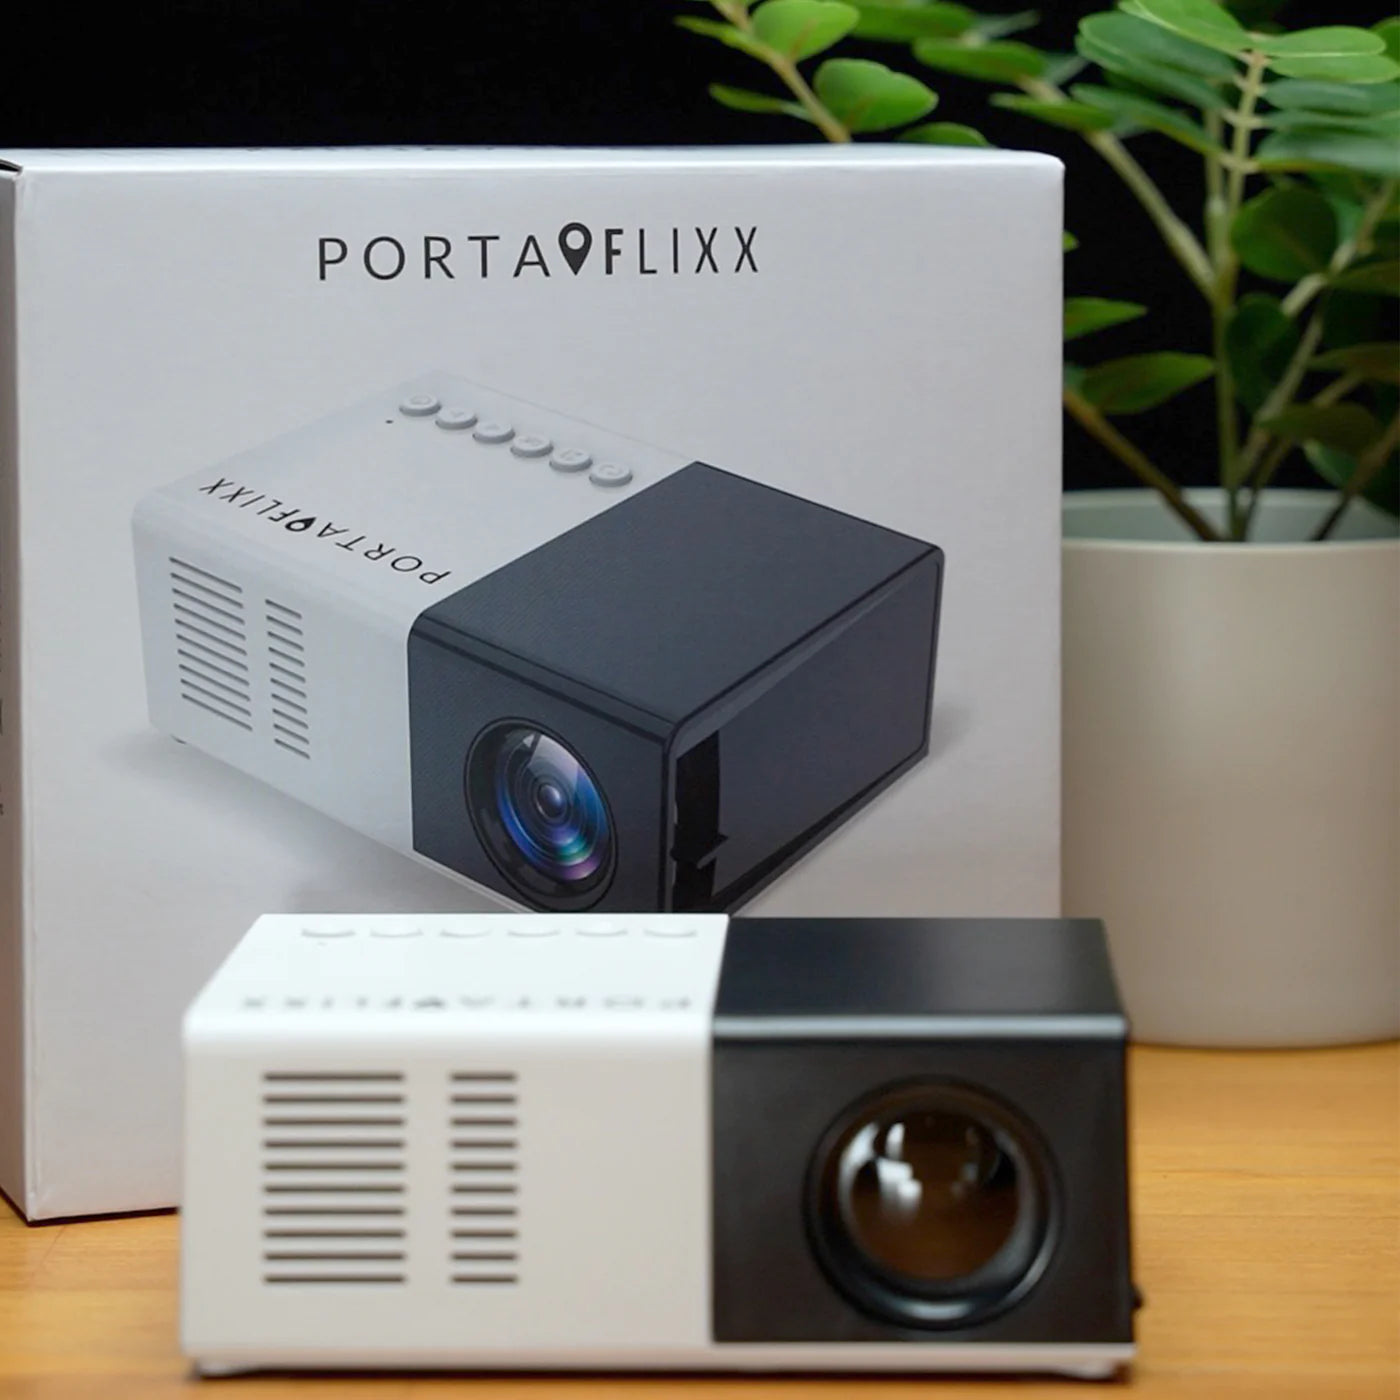 Portaflixx™ Pocket Projector